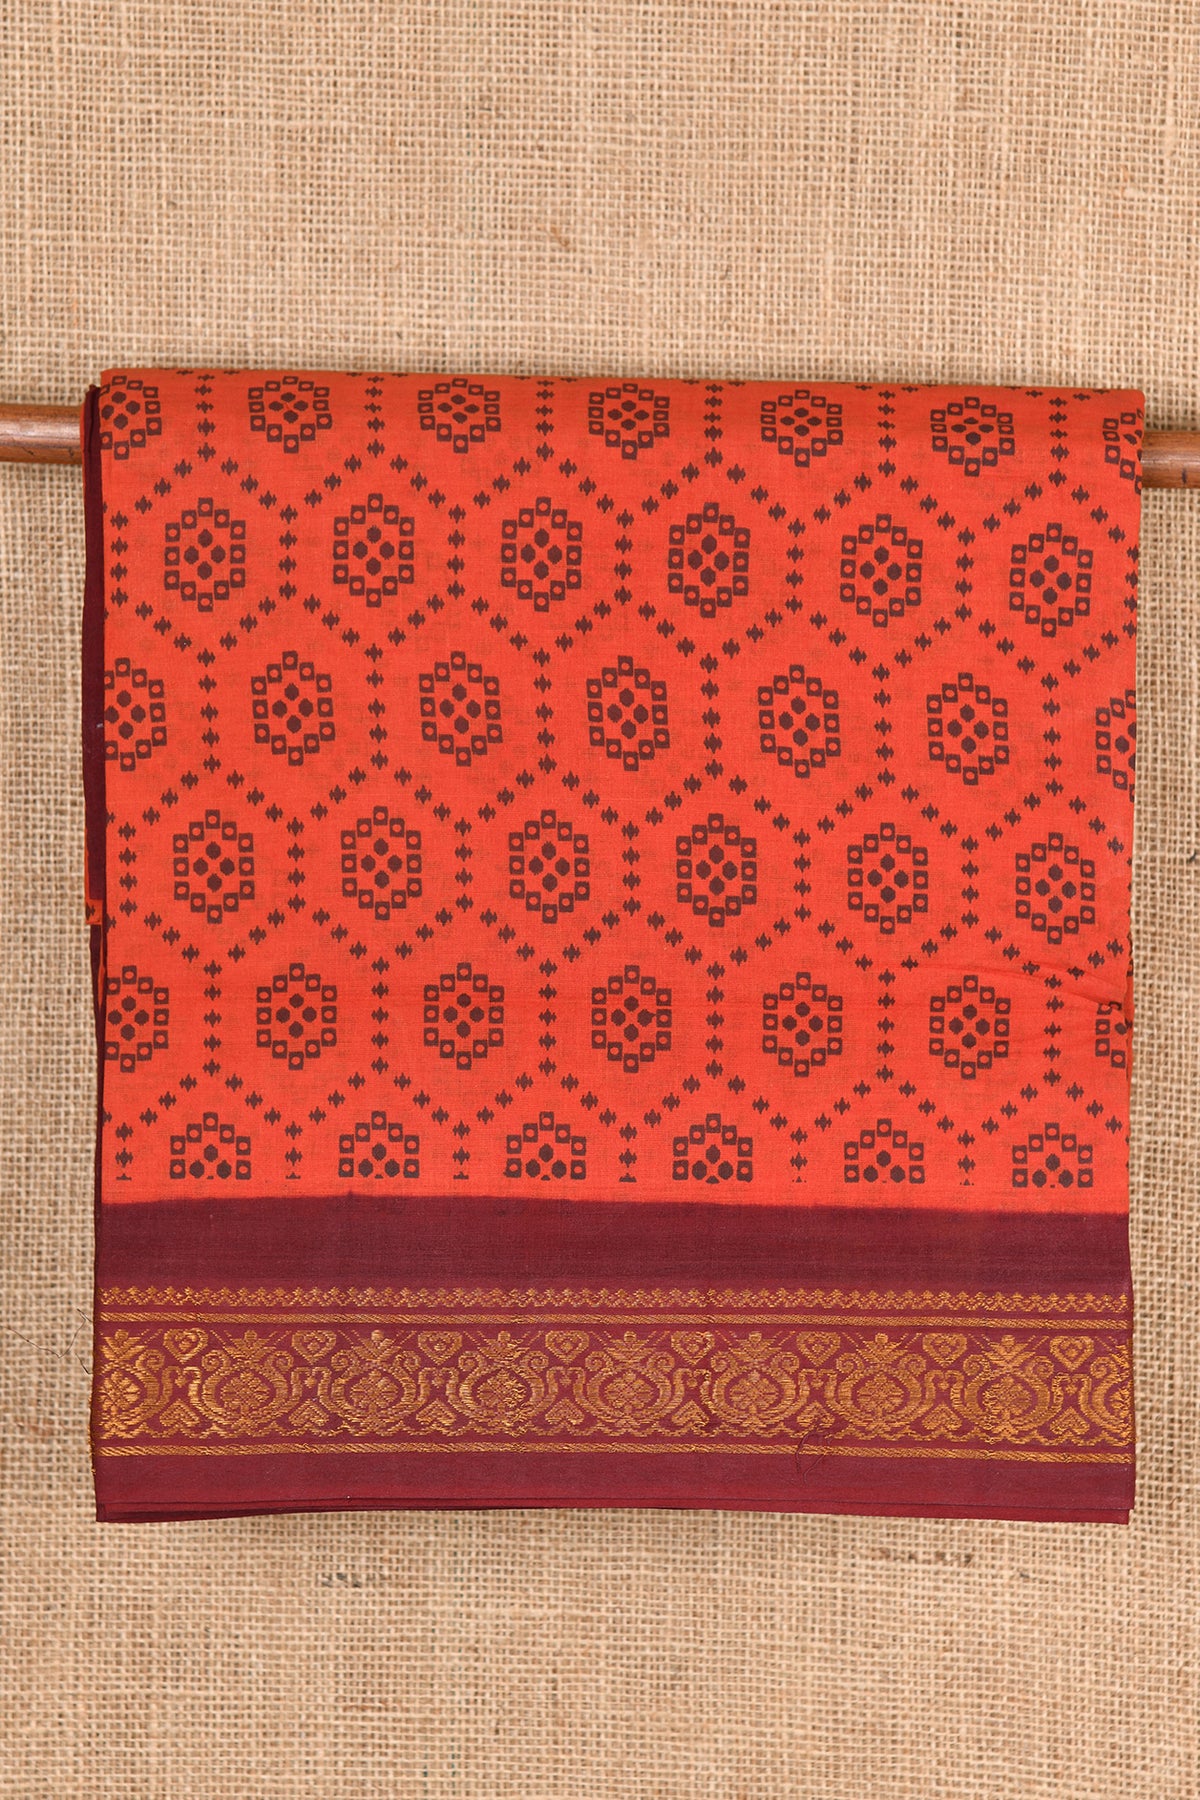 Geometric Design Reddish Brown Sungudi Cotton Saree